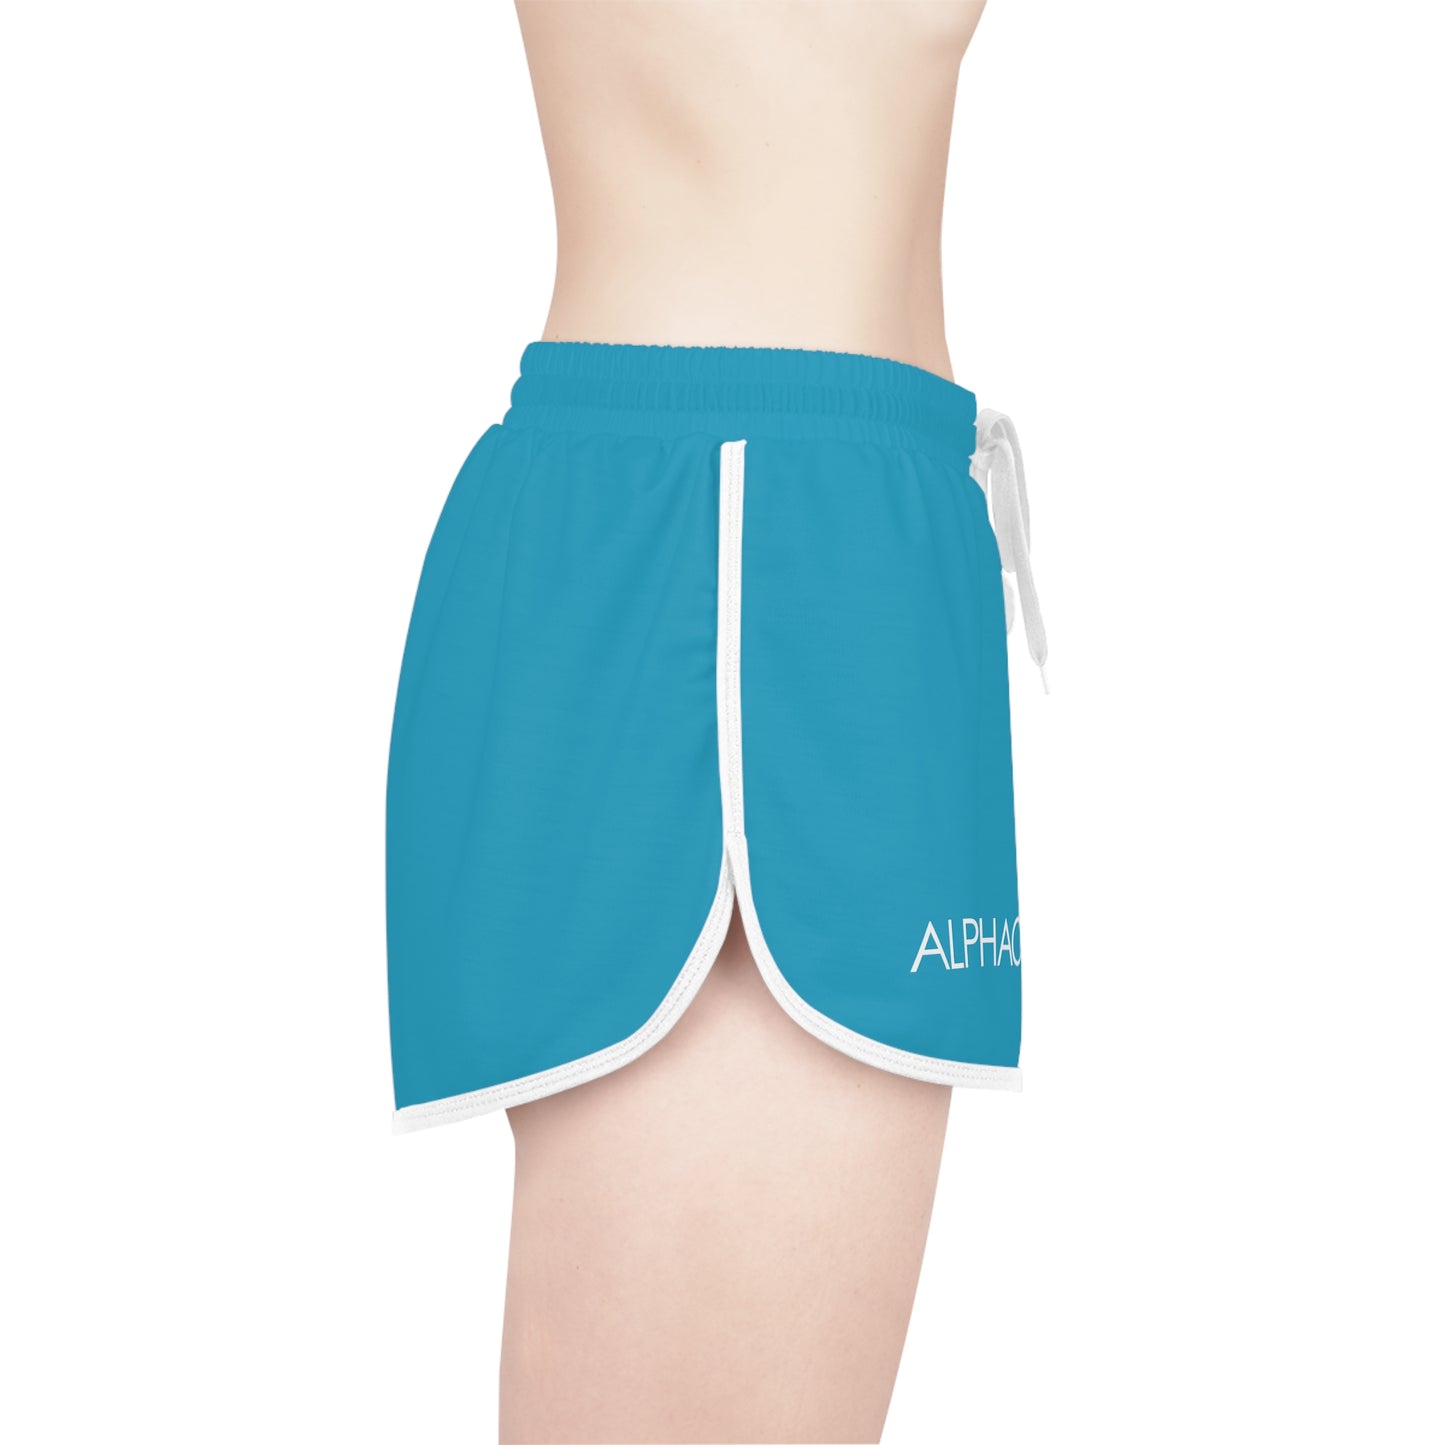 AlphaChic Relaxed Shorts - Light Blue